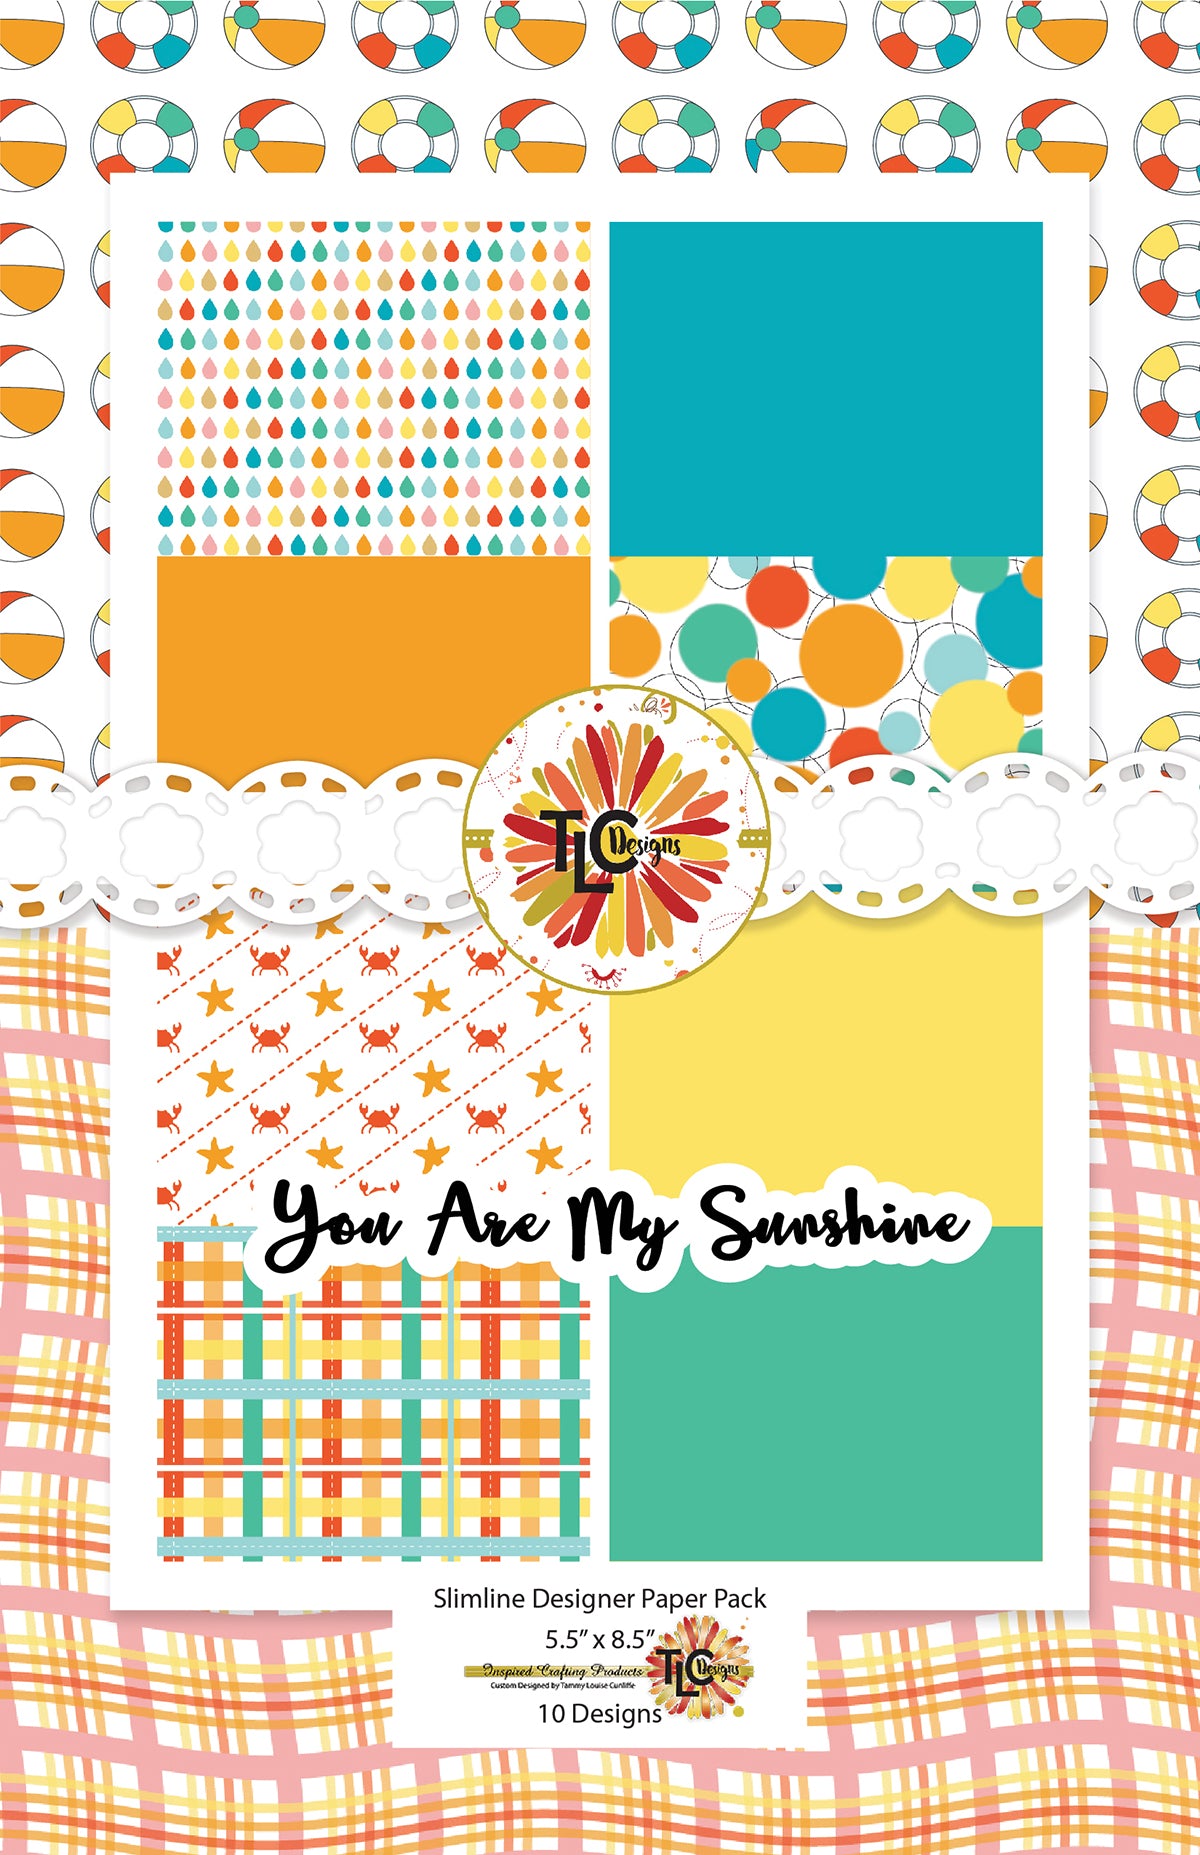 You Are My Sunshine Slimline Digital Paper Pack